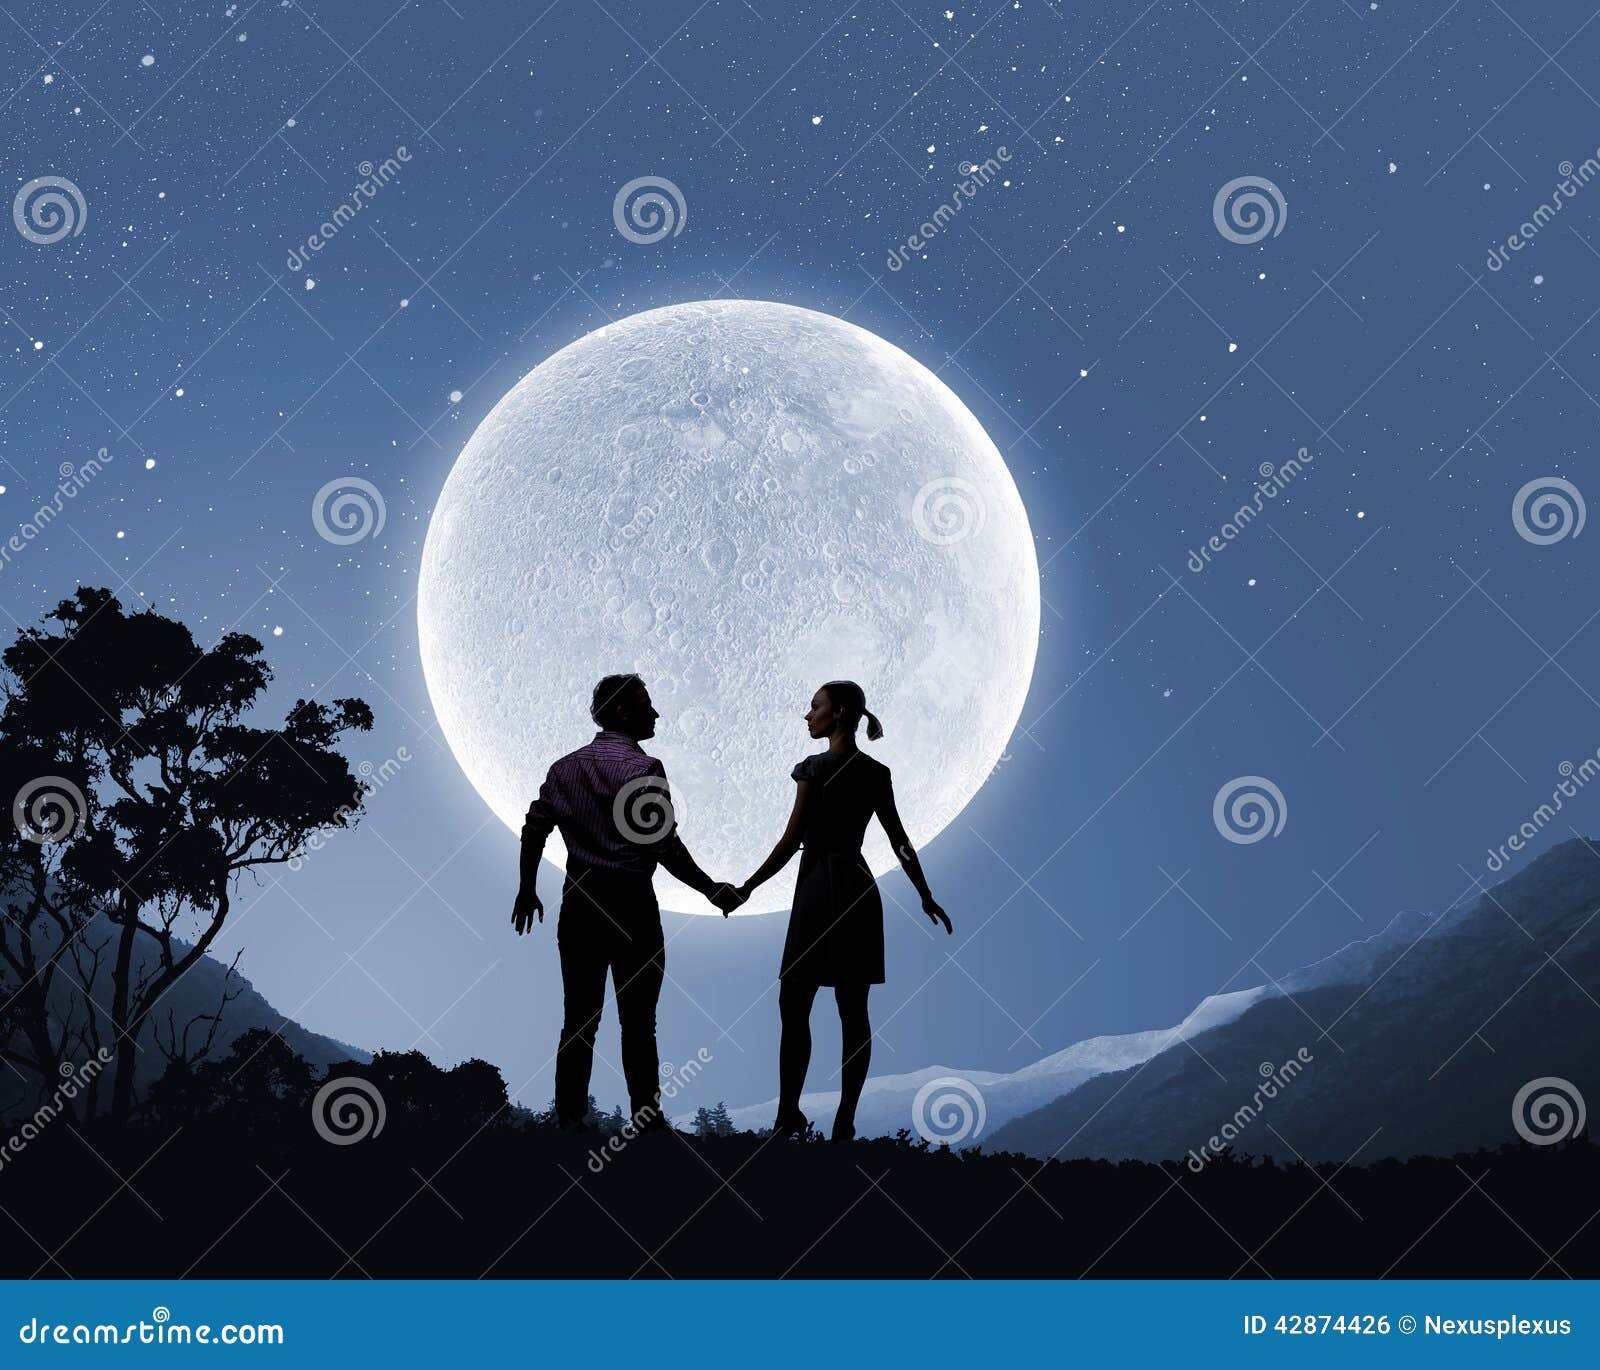 Look at the moon. Looking at the Moon. Girl looking at the Moon. Lucy and David at the Moon. A man looking at the Moon.